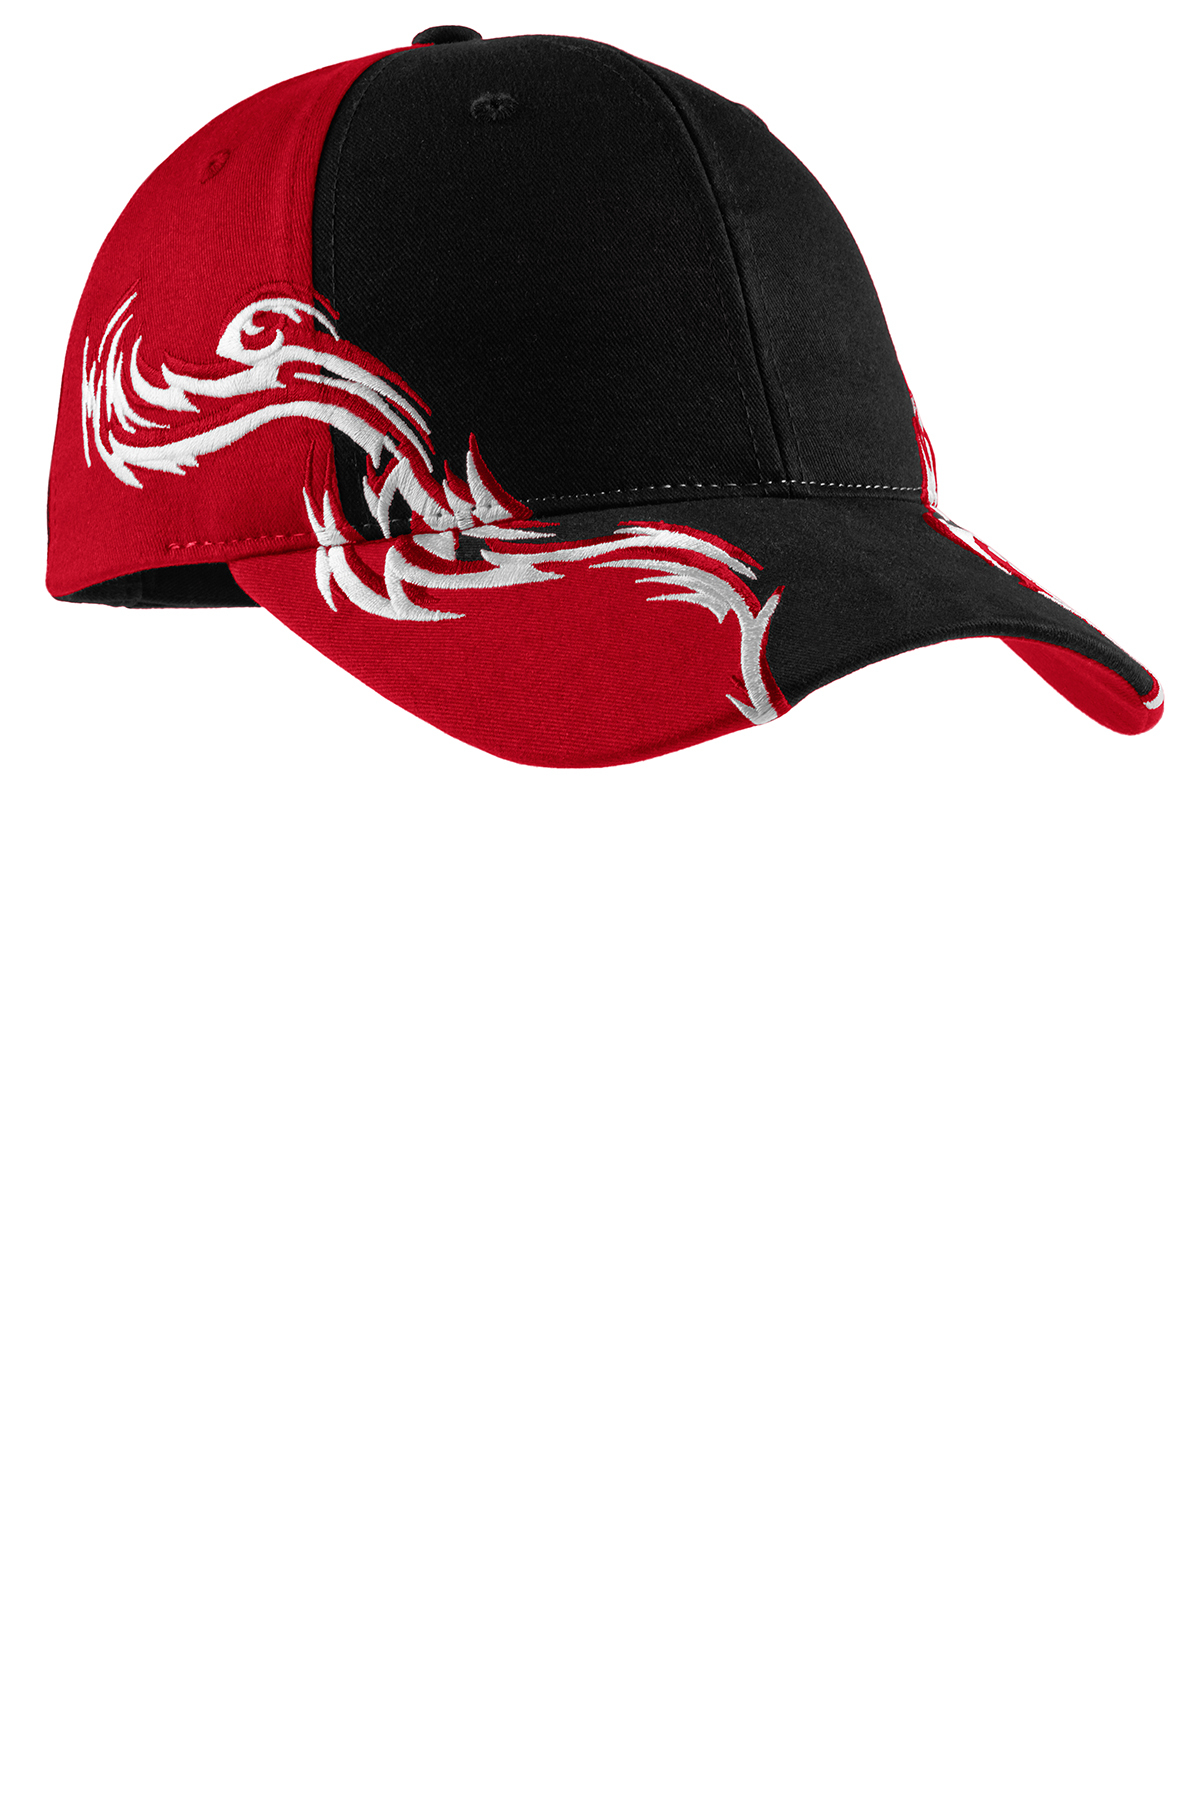 Red Black Vintage Flame Design Cotton Cap 